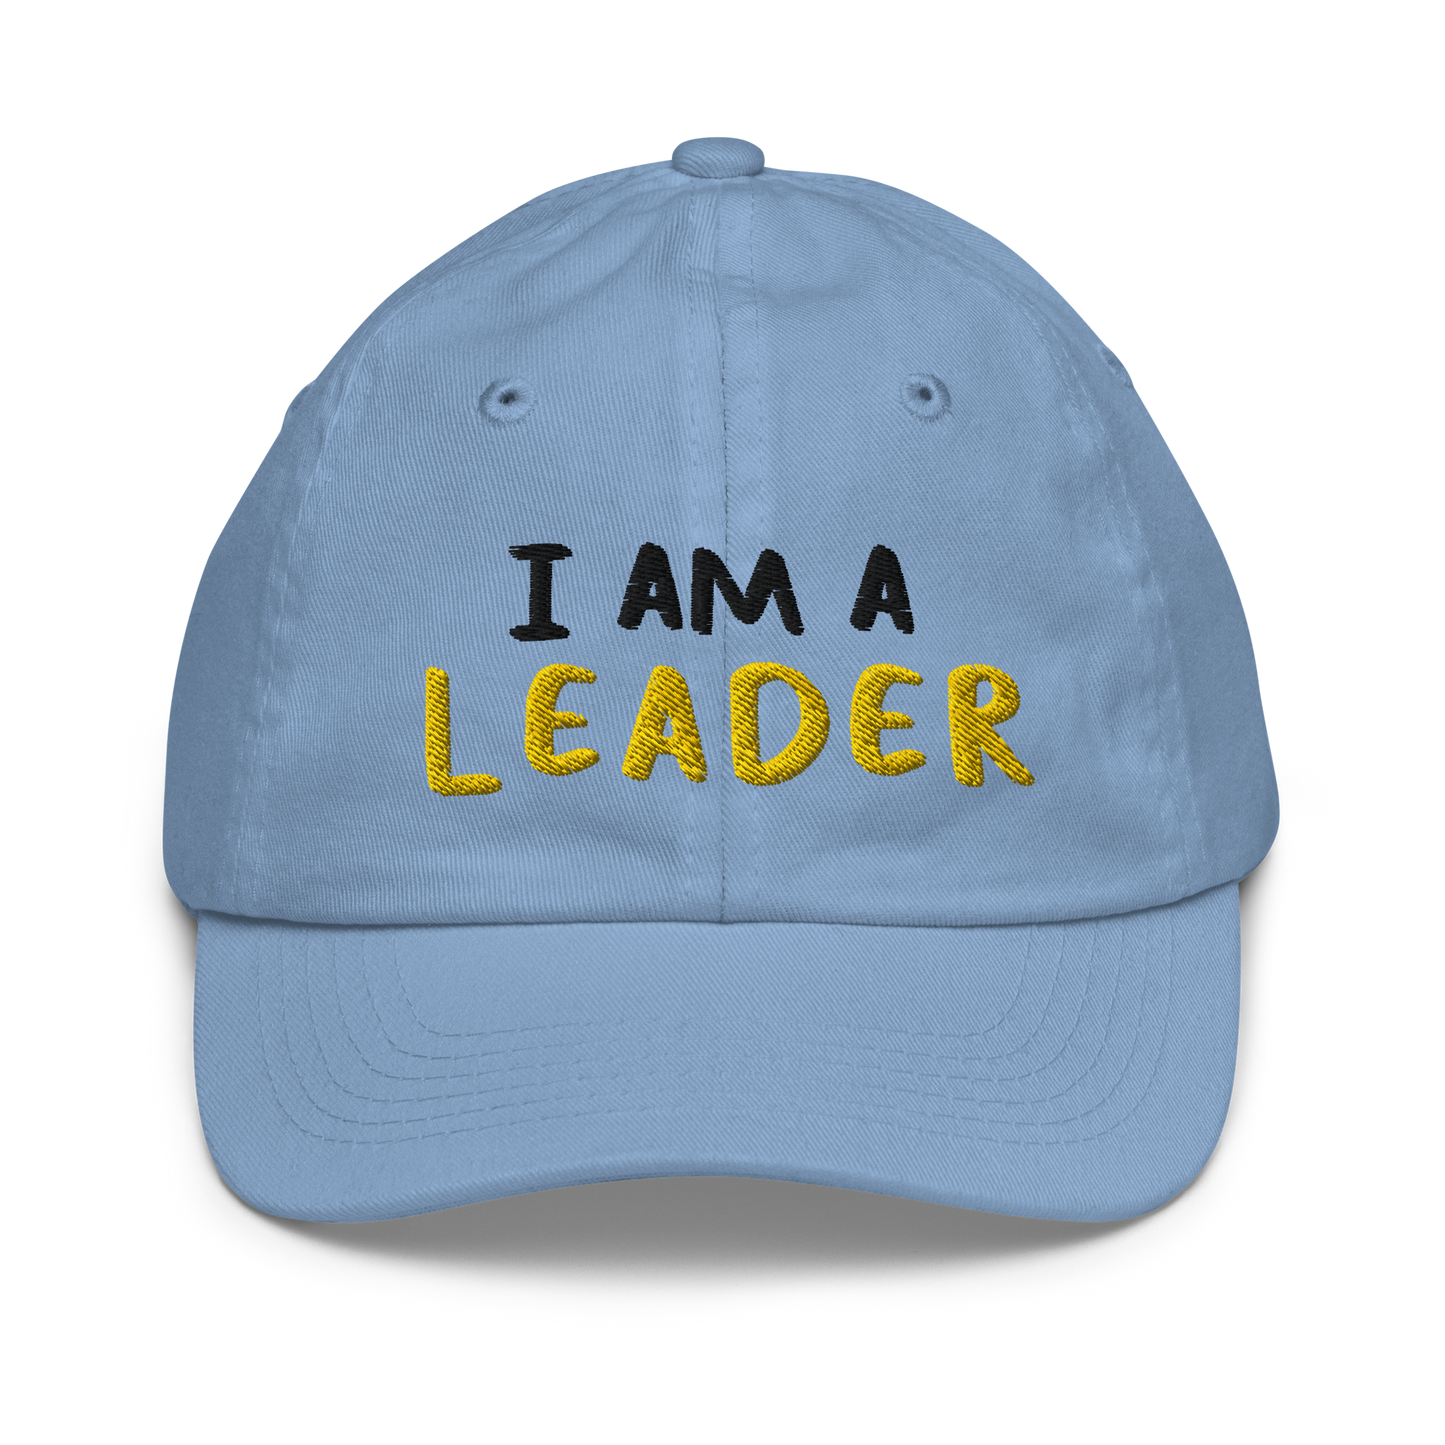 I AM A LEADER - Youth baseball cap